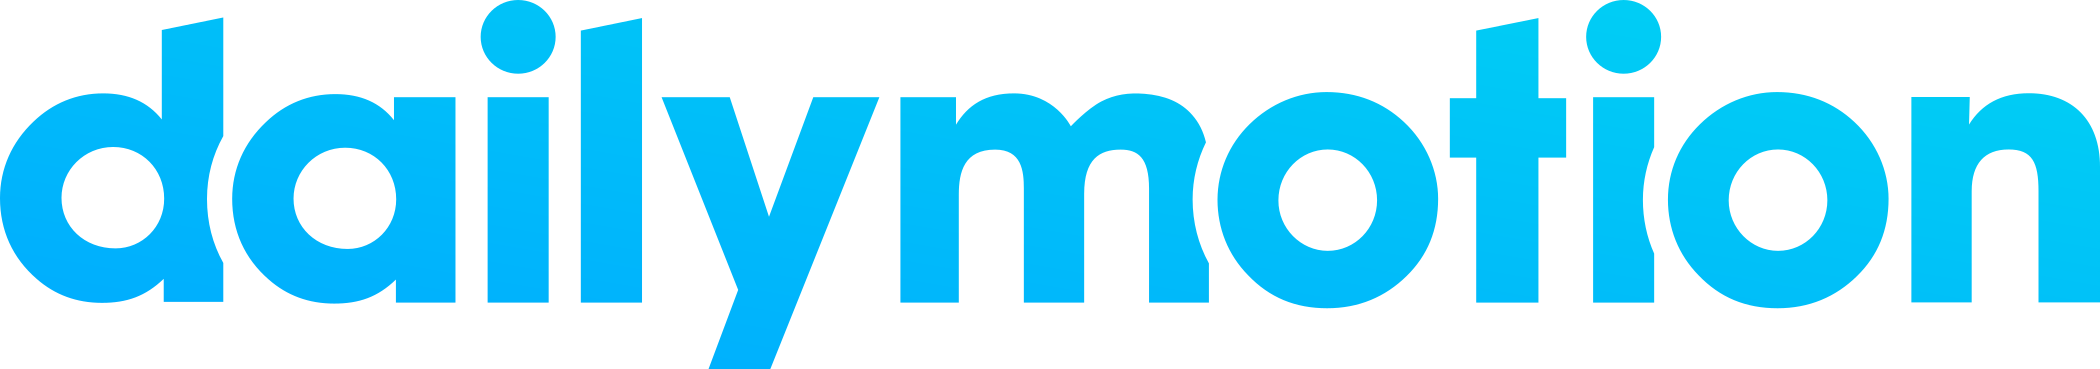 Dailymotion logo.